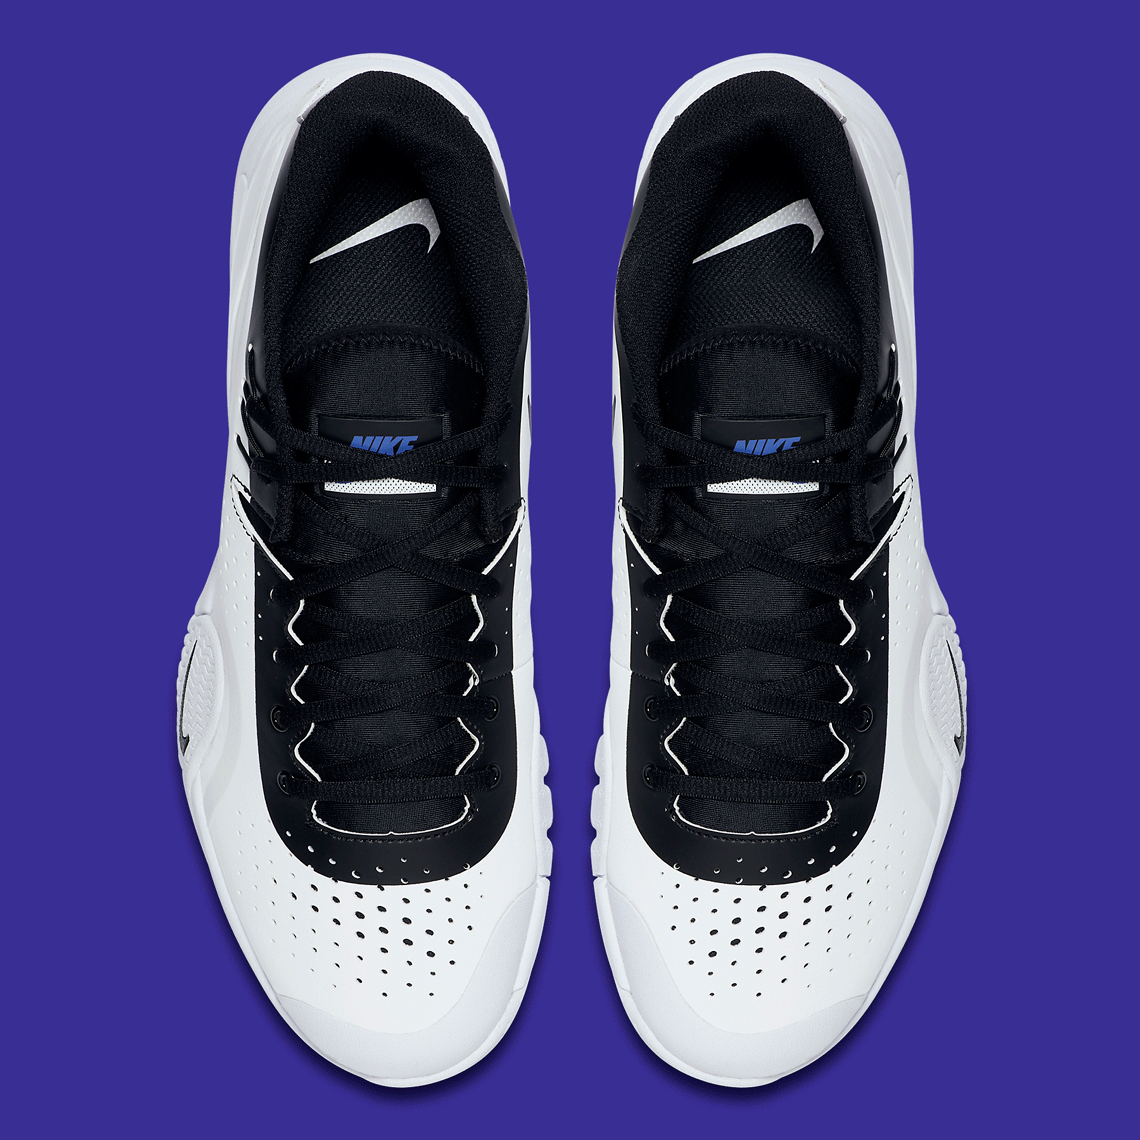 Nikecourt adidas 256001 women black boots shoes clearance Bq0234 102 5